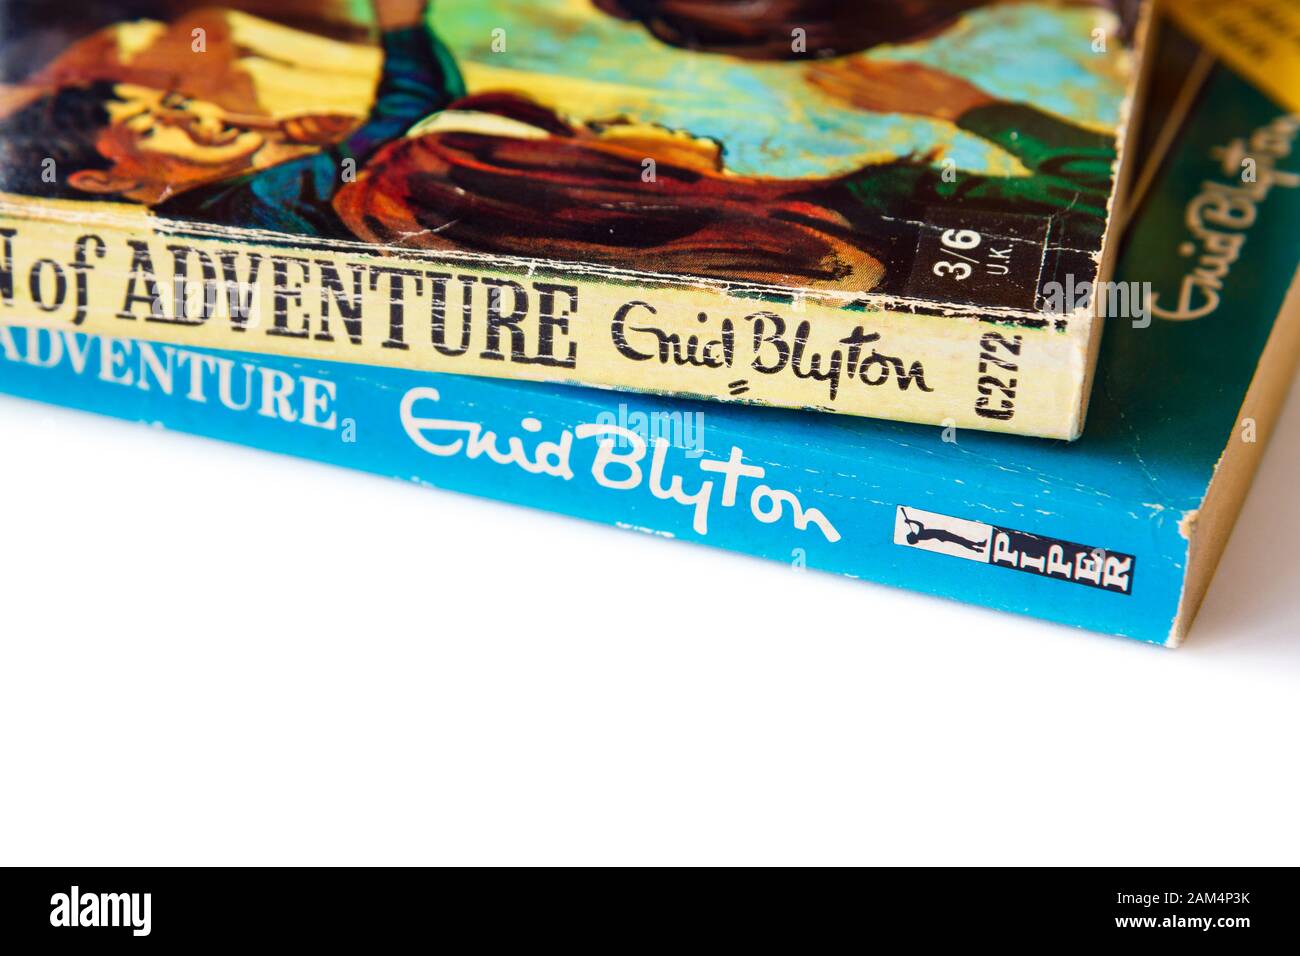 Two tatty worn old books dog-eared paperbacks children's adventure series stories by Enid Blyton on white. England, UK, Britain Stock Photo